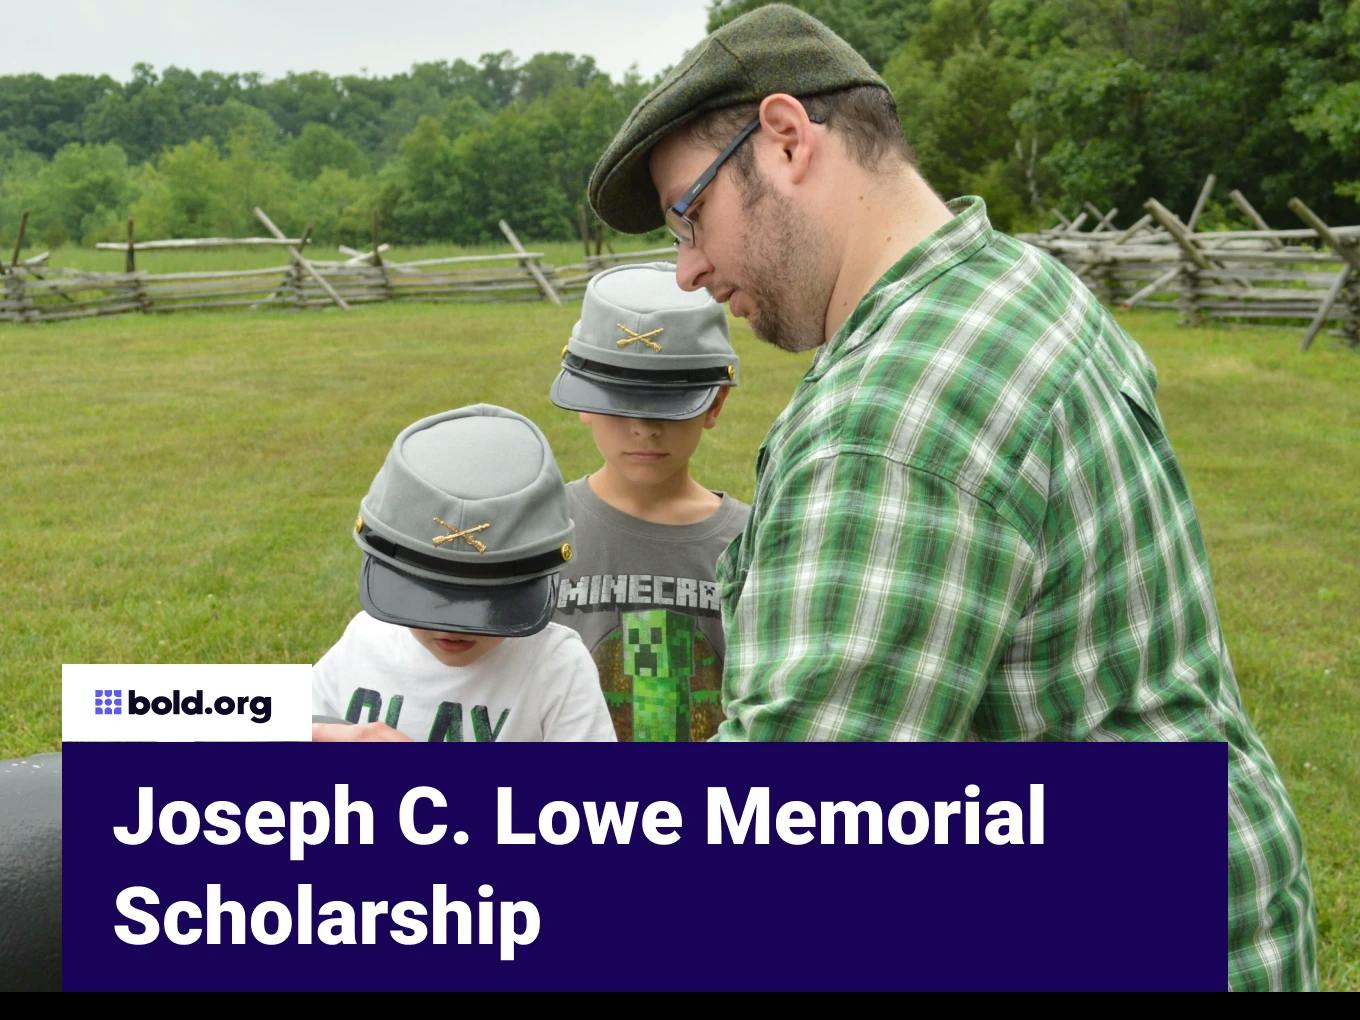 Joseph C. Lowe Memorial Scholarship